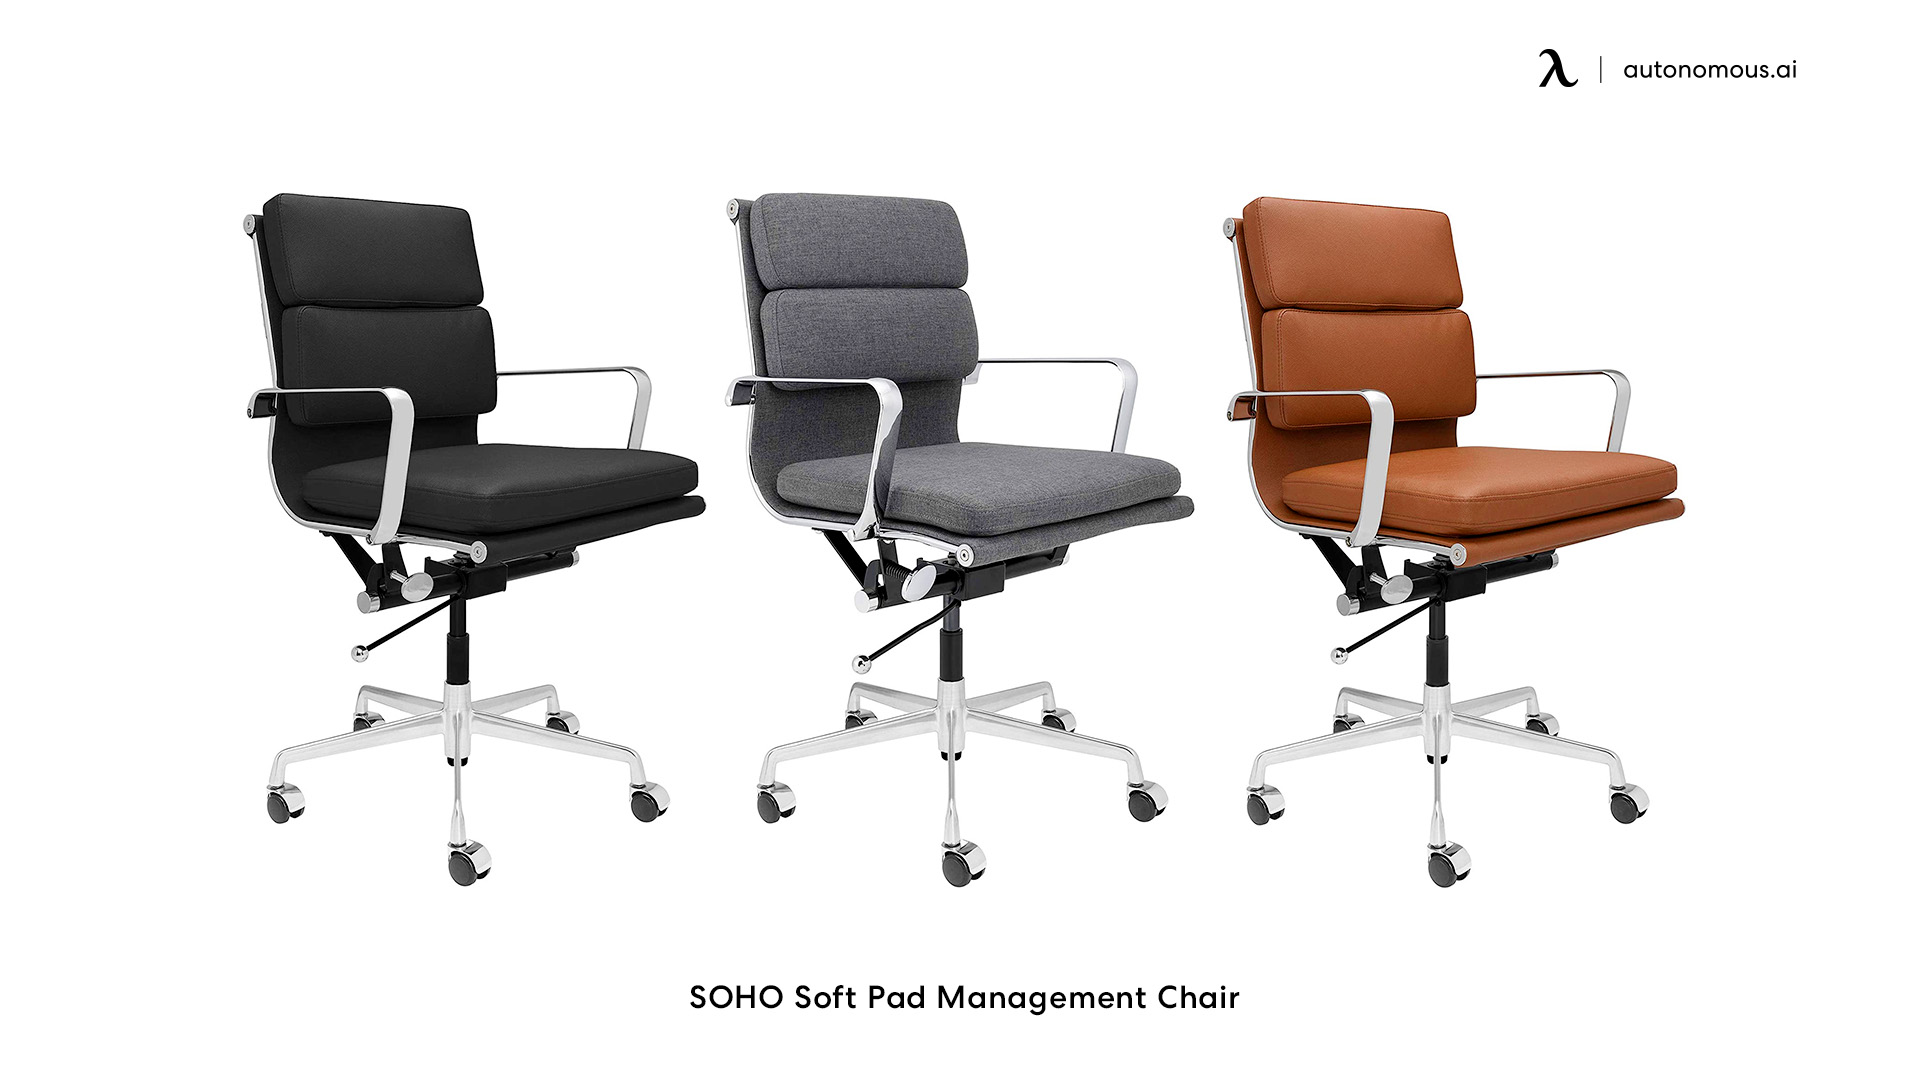 SOHO Soft Pad Management mid-century modern desk chair